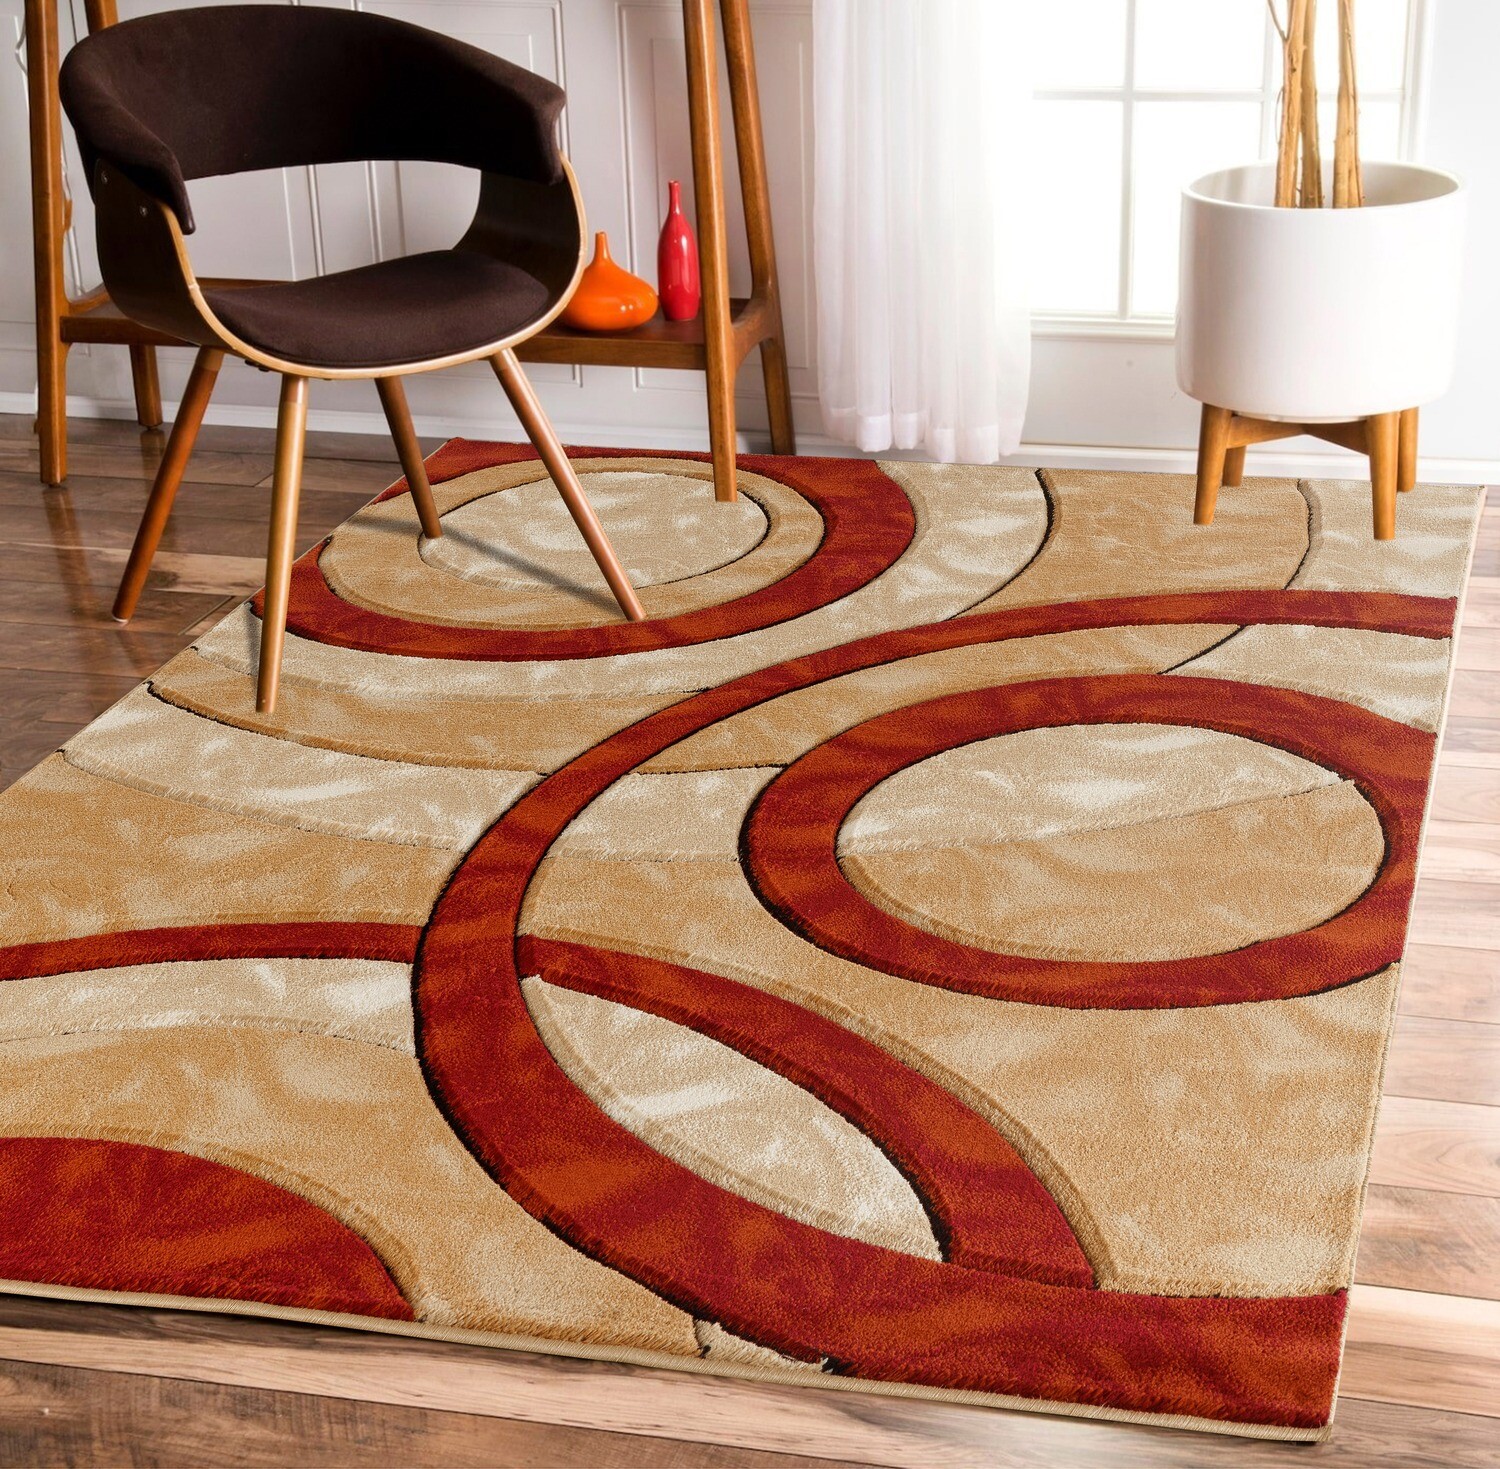 Platinum Collection Circular Dark Red Rug Carpet Living Room Dining Accent (6607)